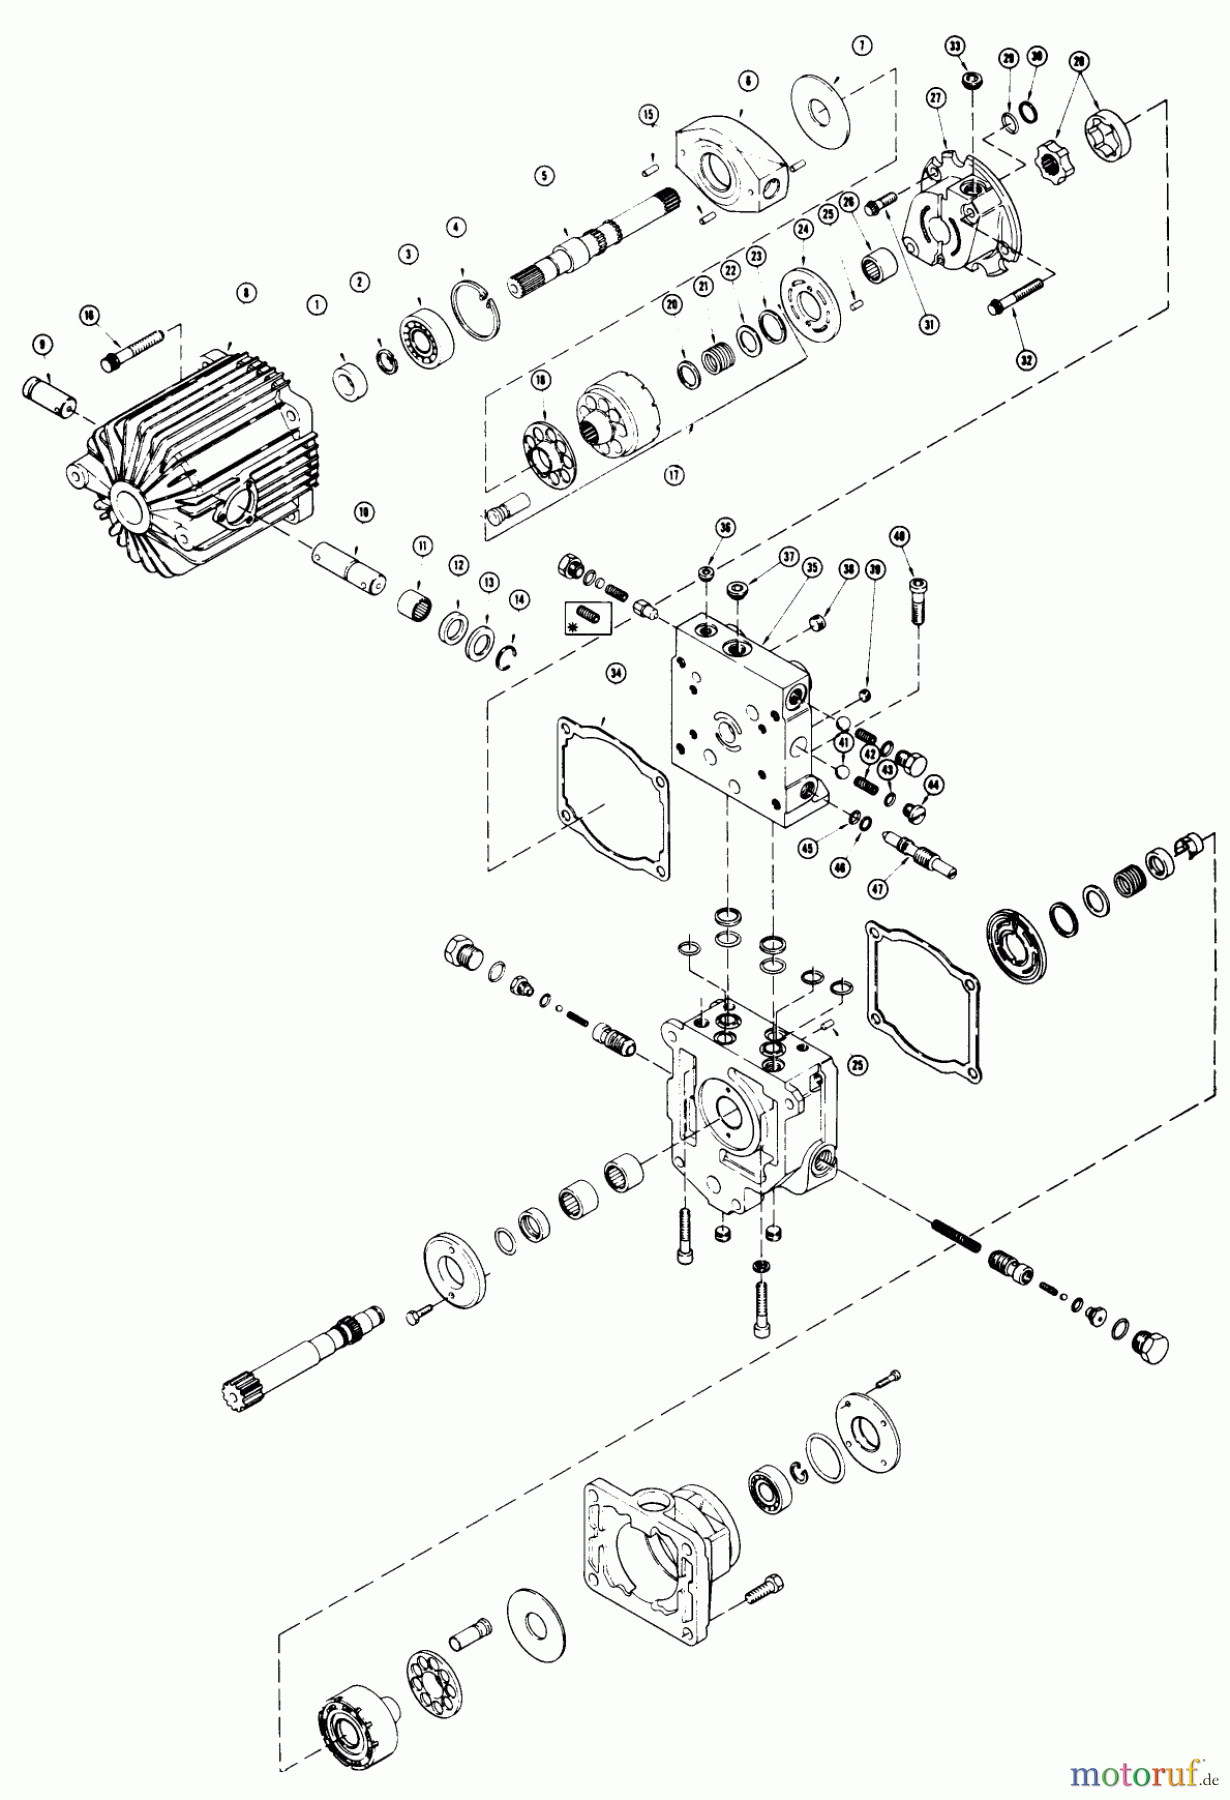  Toro Neu Mowers, Lawn & Garden Tractor Seite 1 71-12KS02 (C-120) - Toro C-120 Automatic Tractor, 1977 HYDROSTATIC TRANSMISSION #2